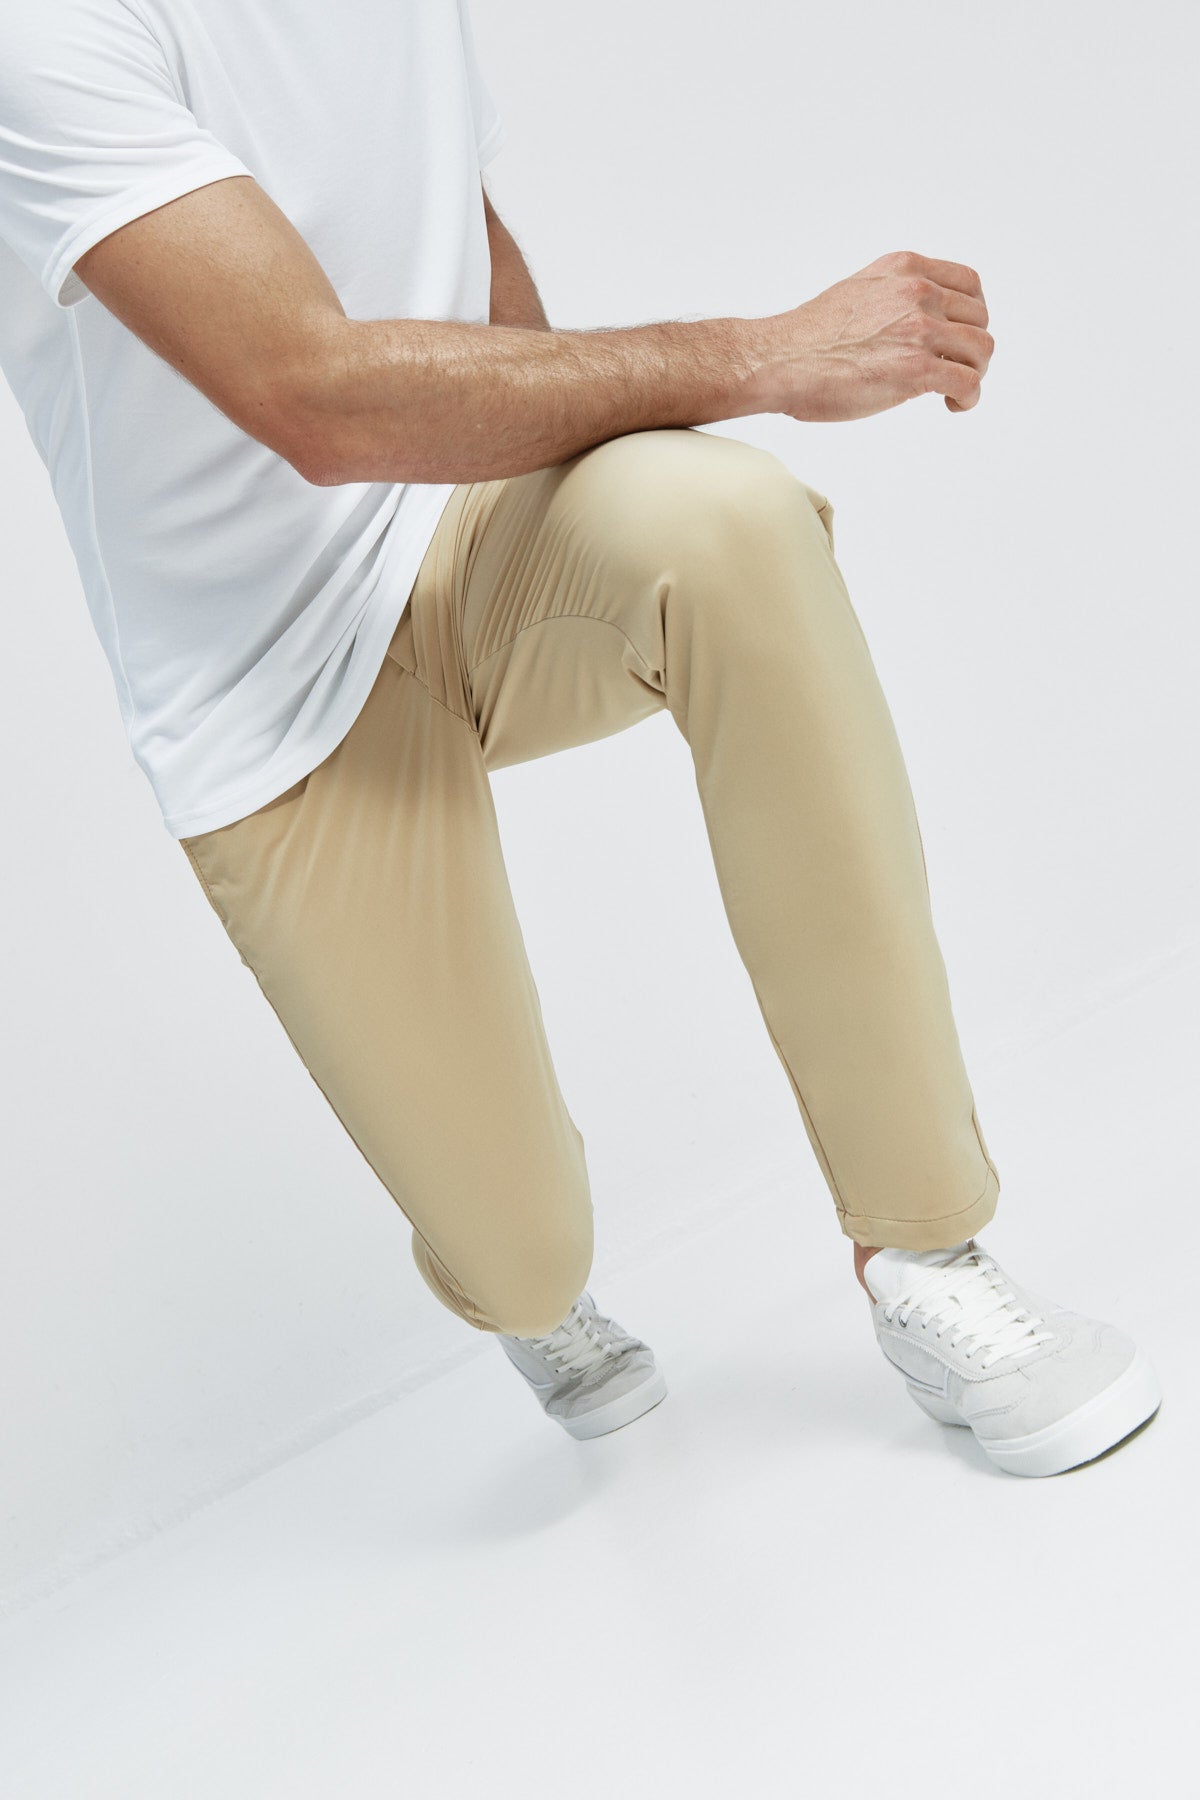 Pantalón para hombre beige: Pantalón chino slim beige para hombre con tecnología termorreguladora Coolmax. Foto flexibilidad.